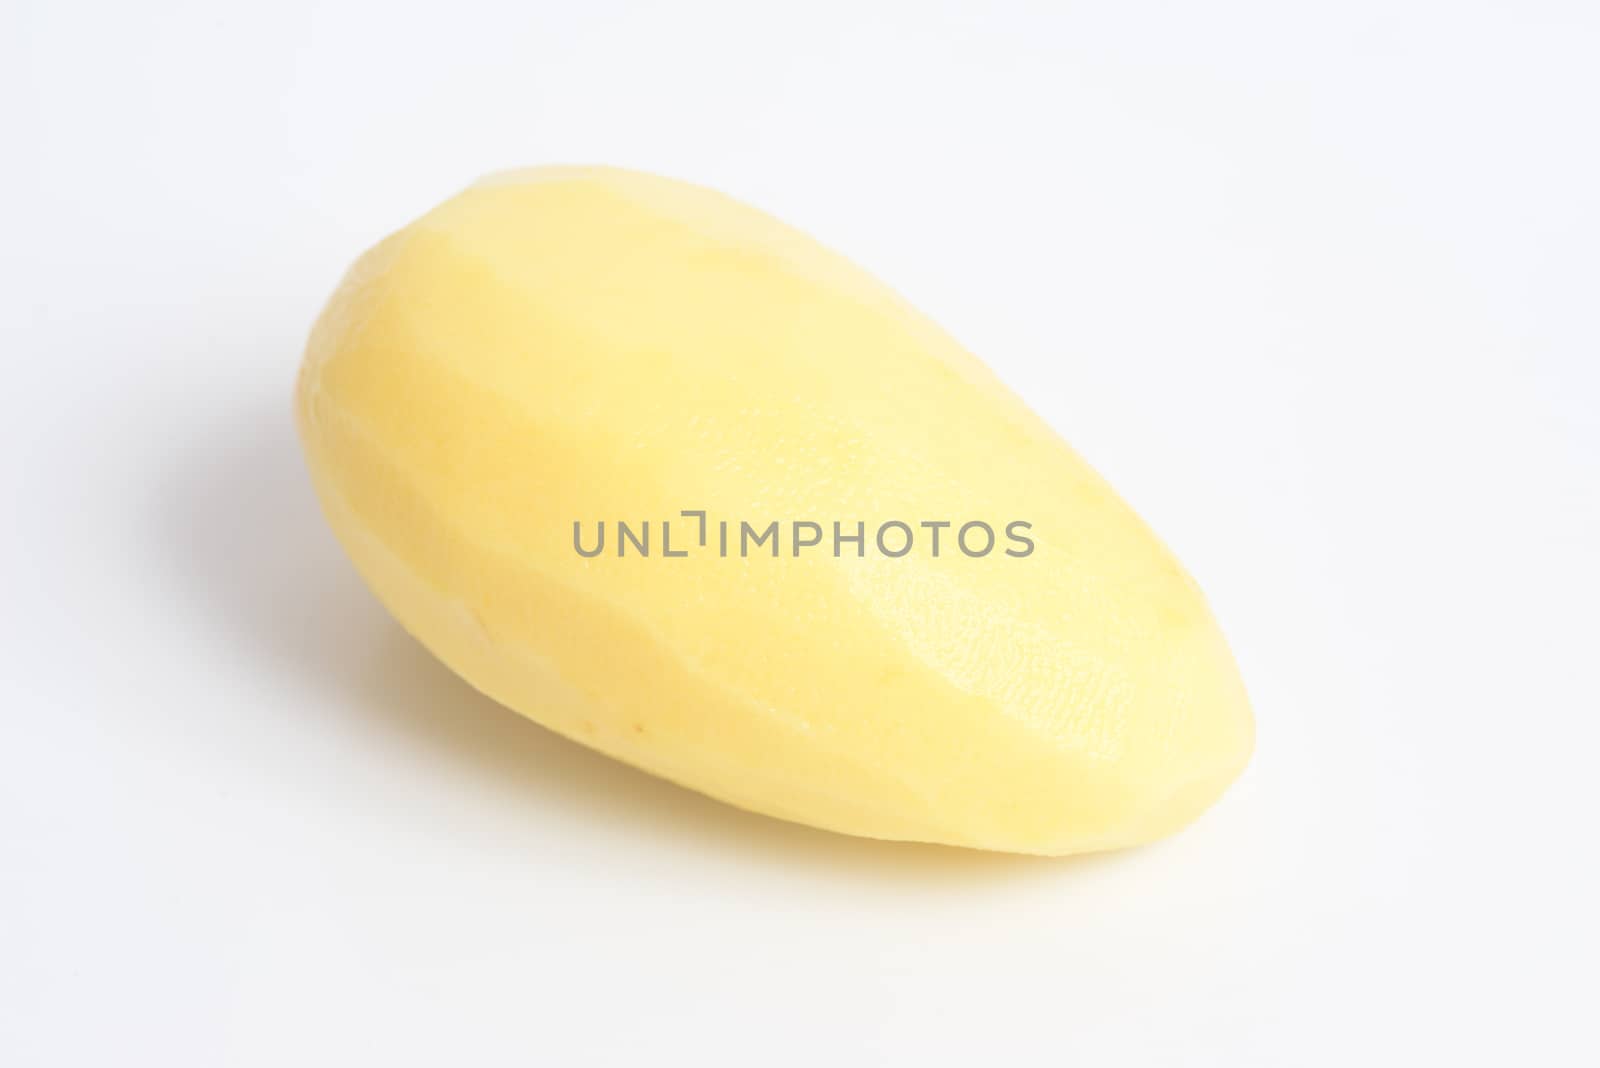 Raw peeled potato on white background by ideation90